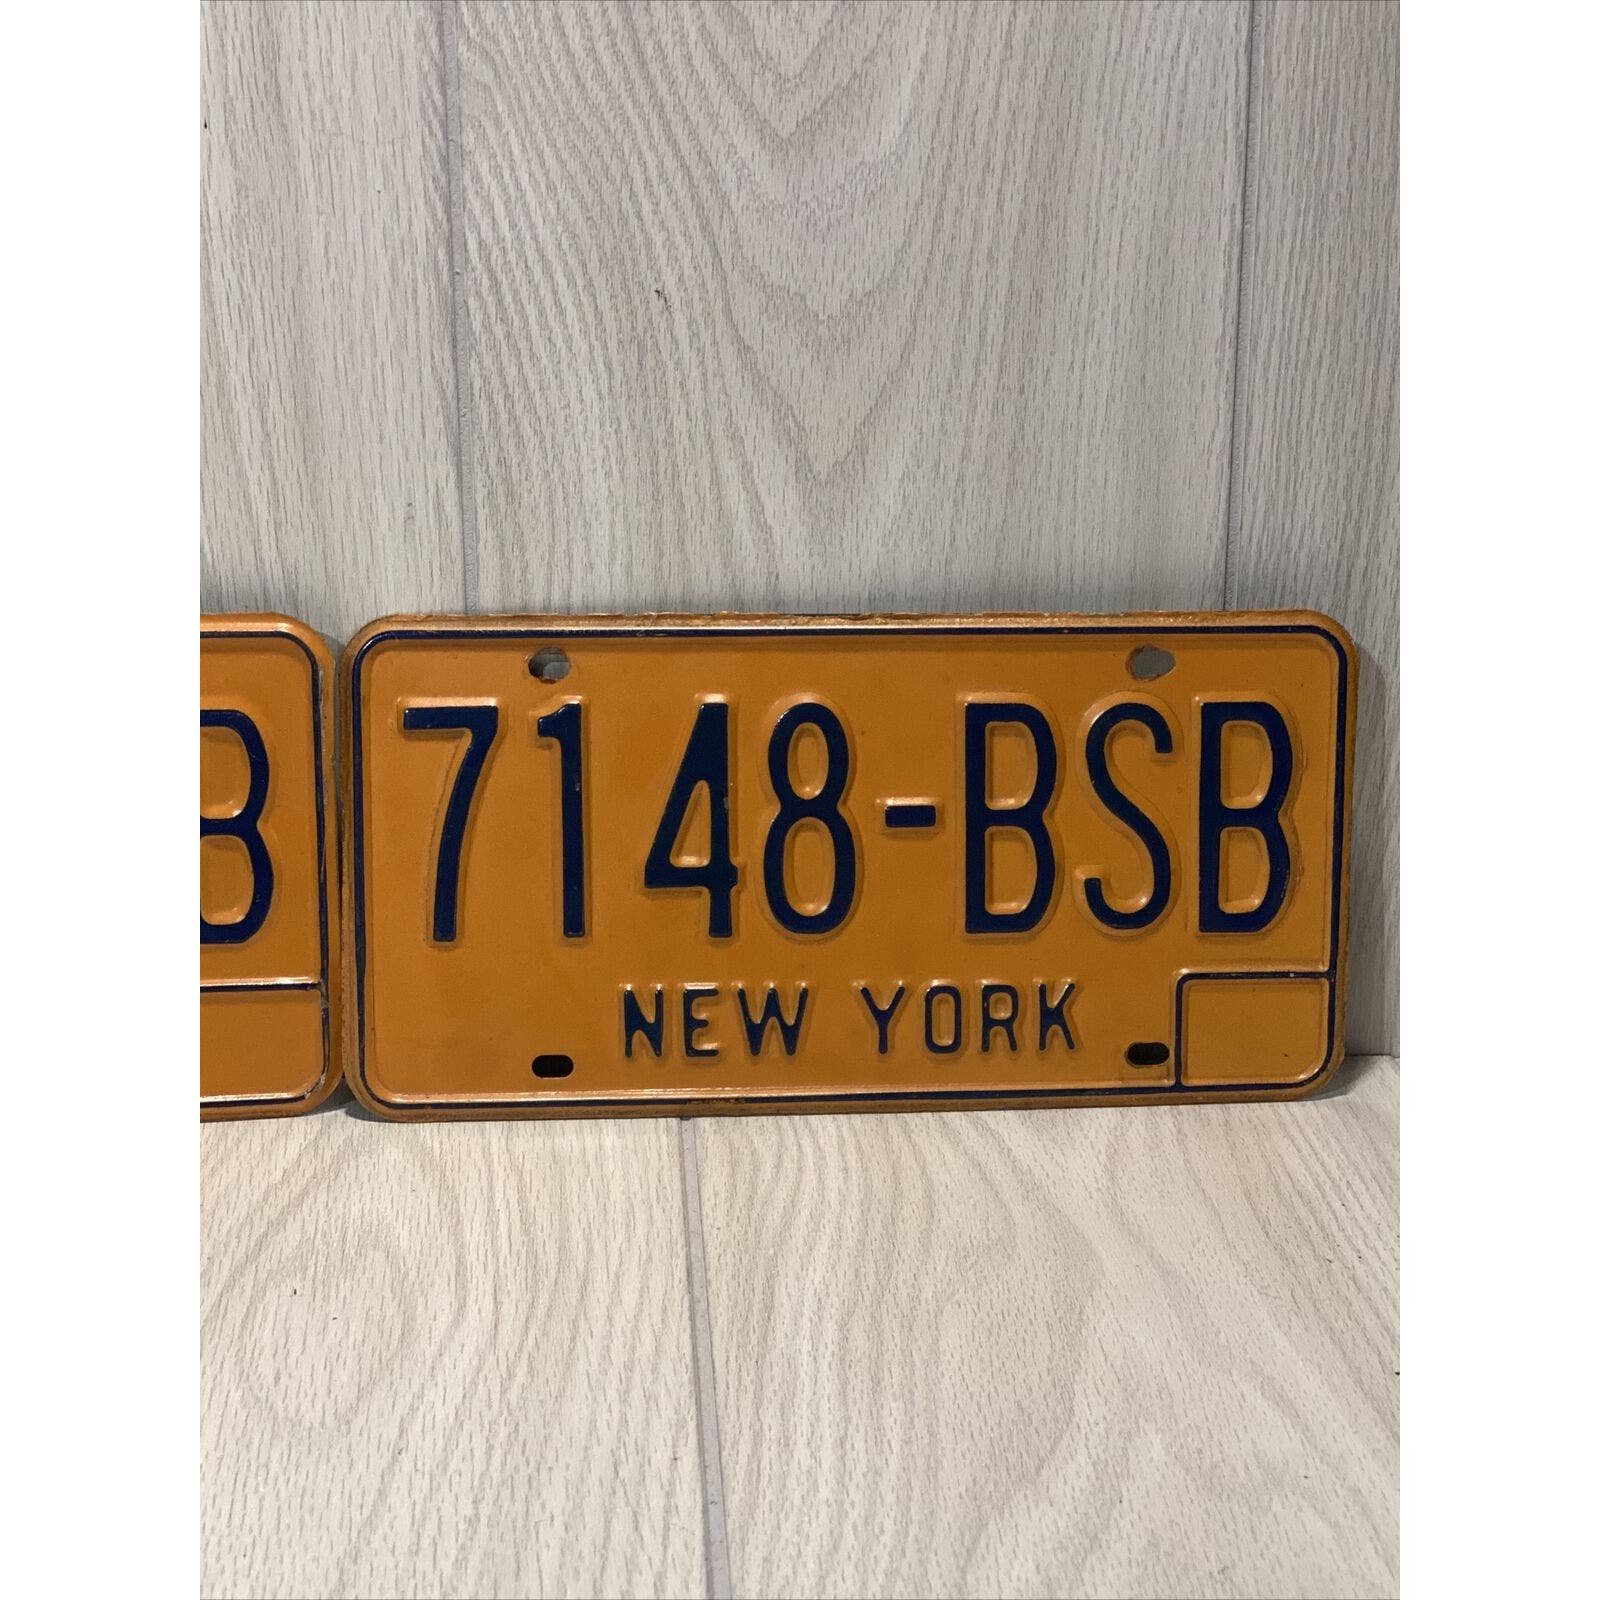 Vintage New York License Plate Twin Pair - NEW YORK 7148-BSB 7MECgrnTl